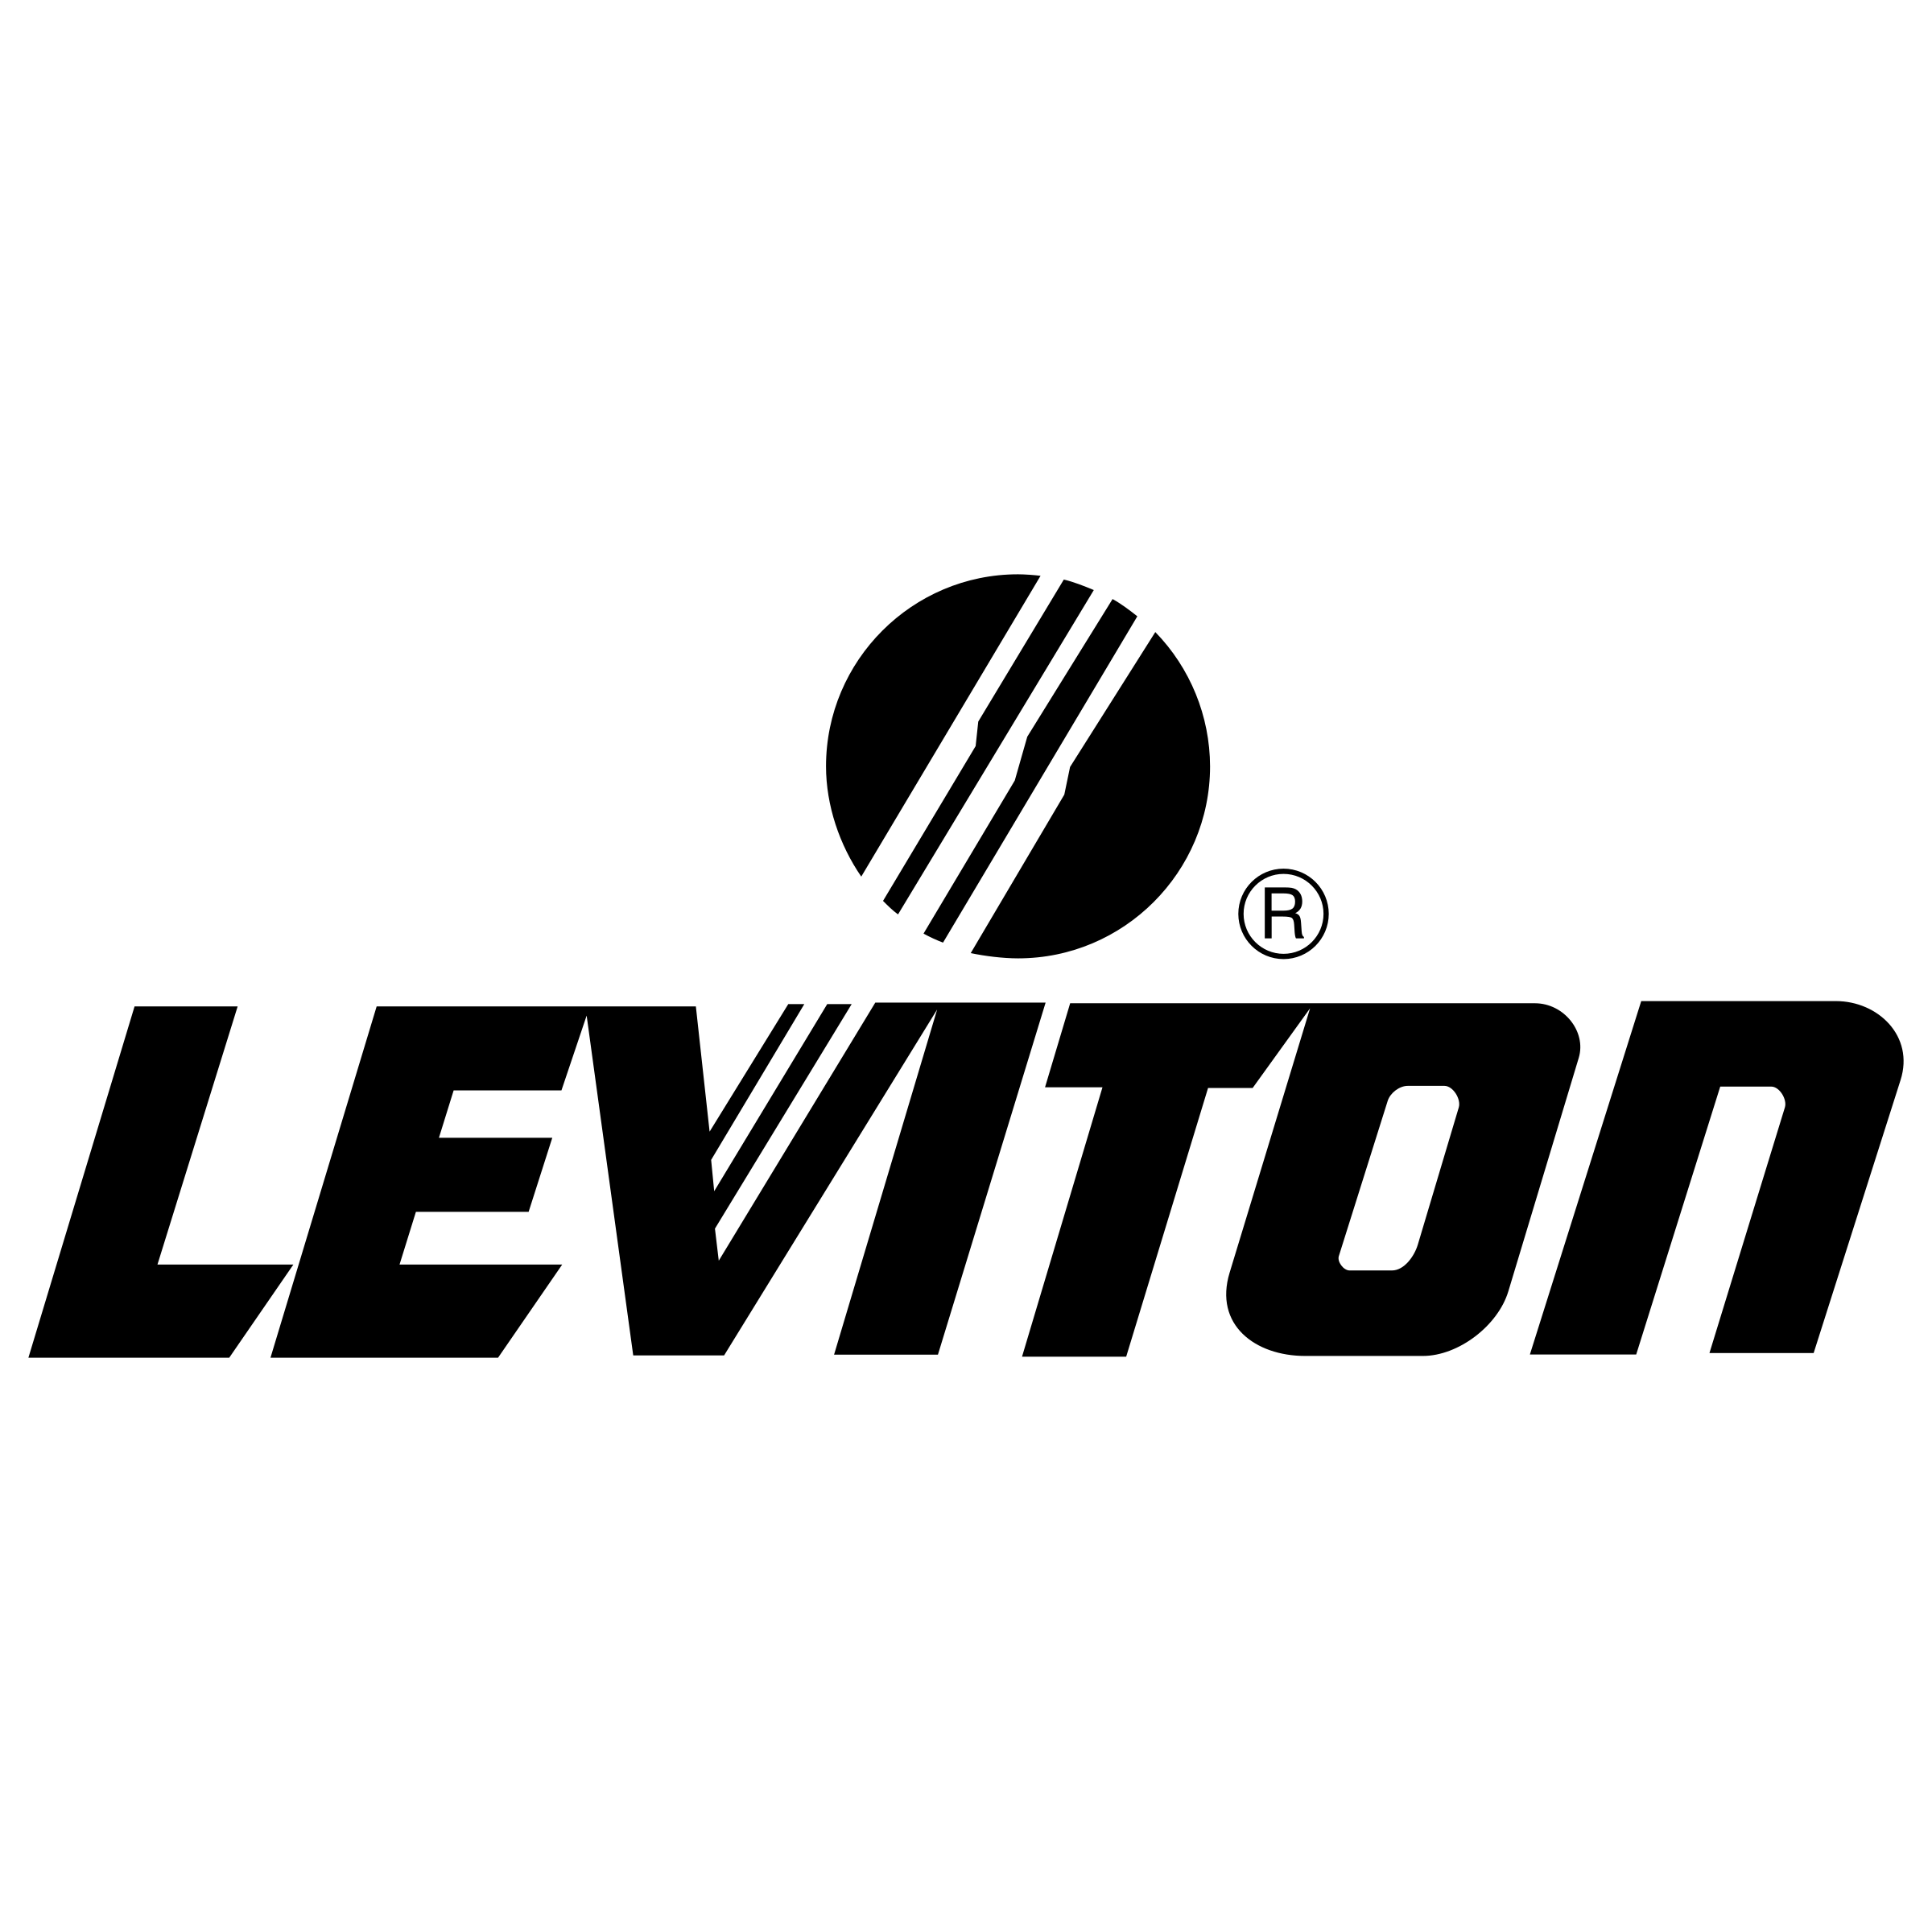 Leviton Logo - Leviton Logo PNG Transparent & SVG Vector - Freebie Supply